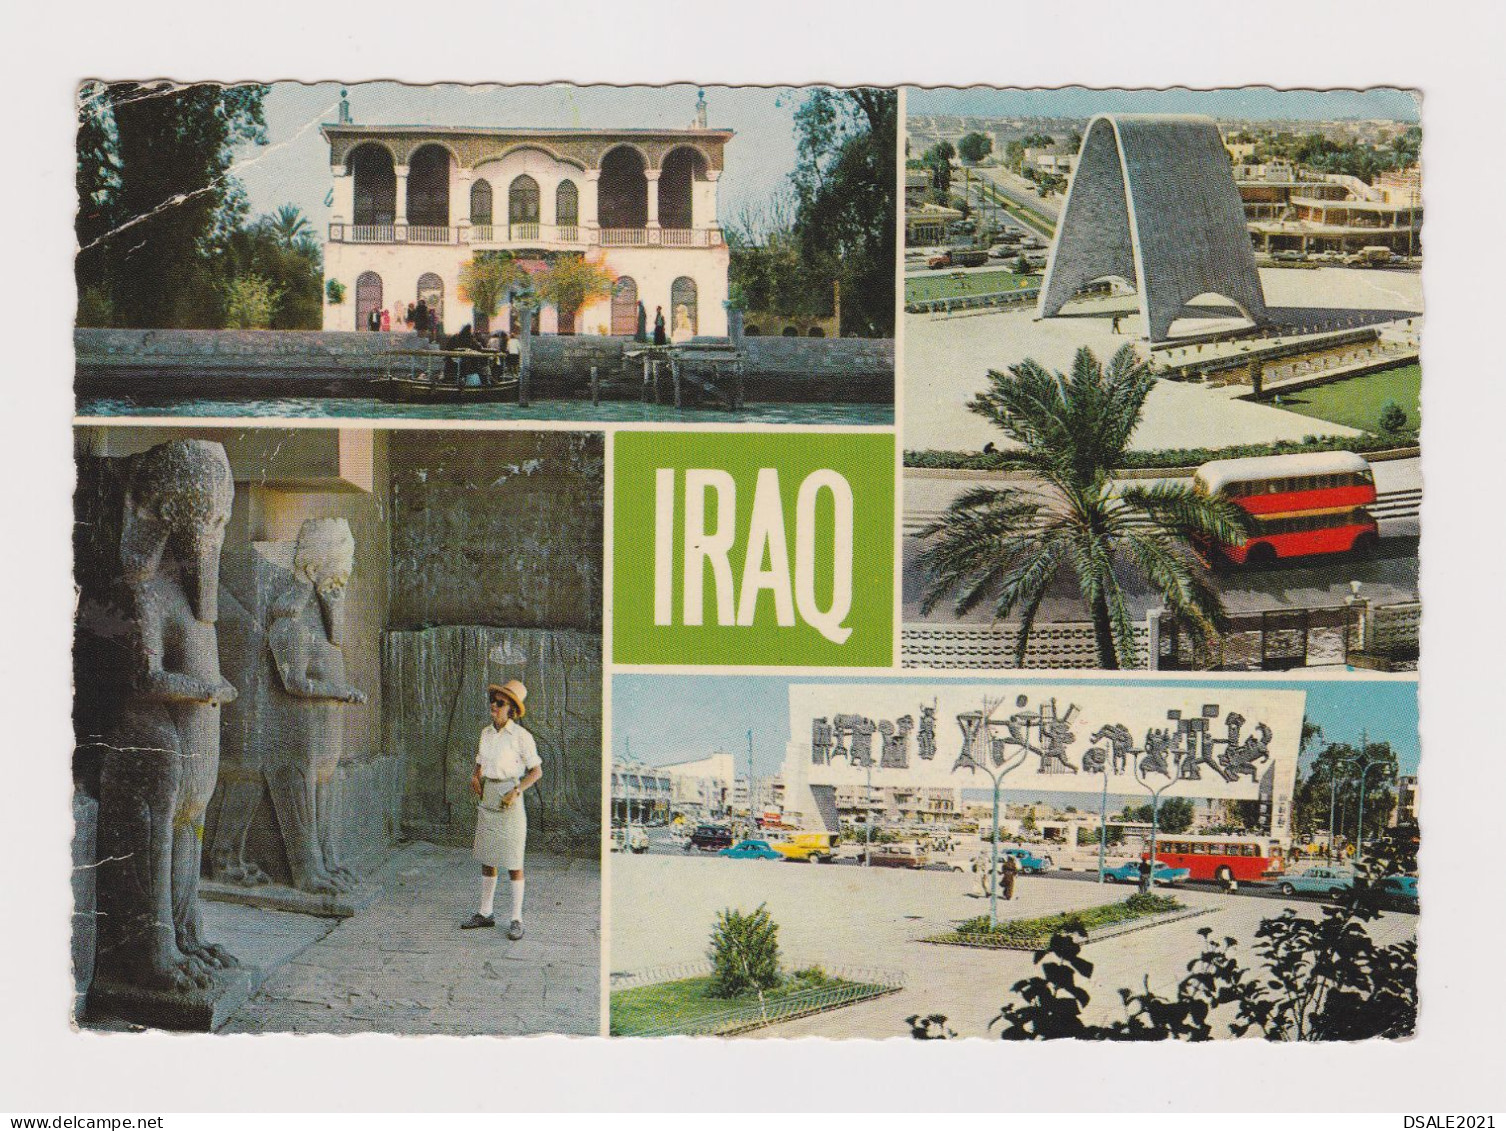 IRAQ Multiple View Photo Postcard, Buildings, Bus, Many Old Car, Monument, Vintage Photo Postcard RPPc (67446) - Iraq